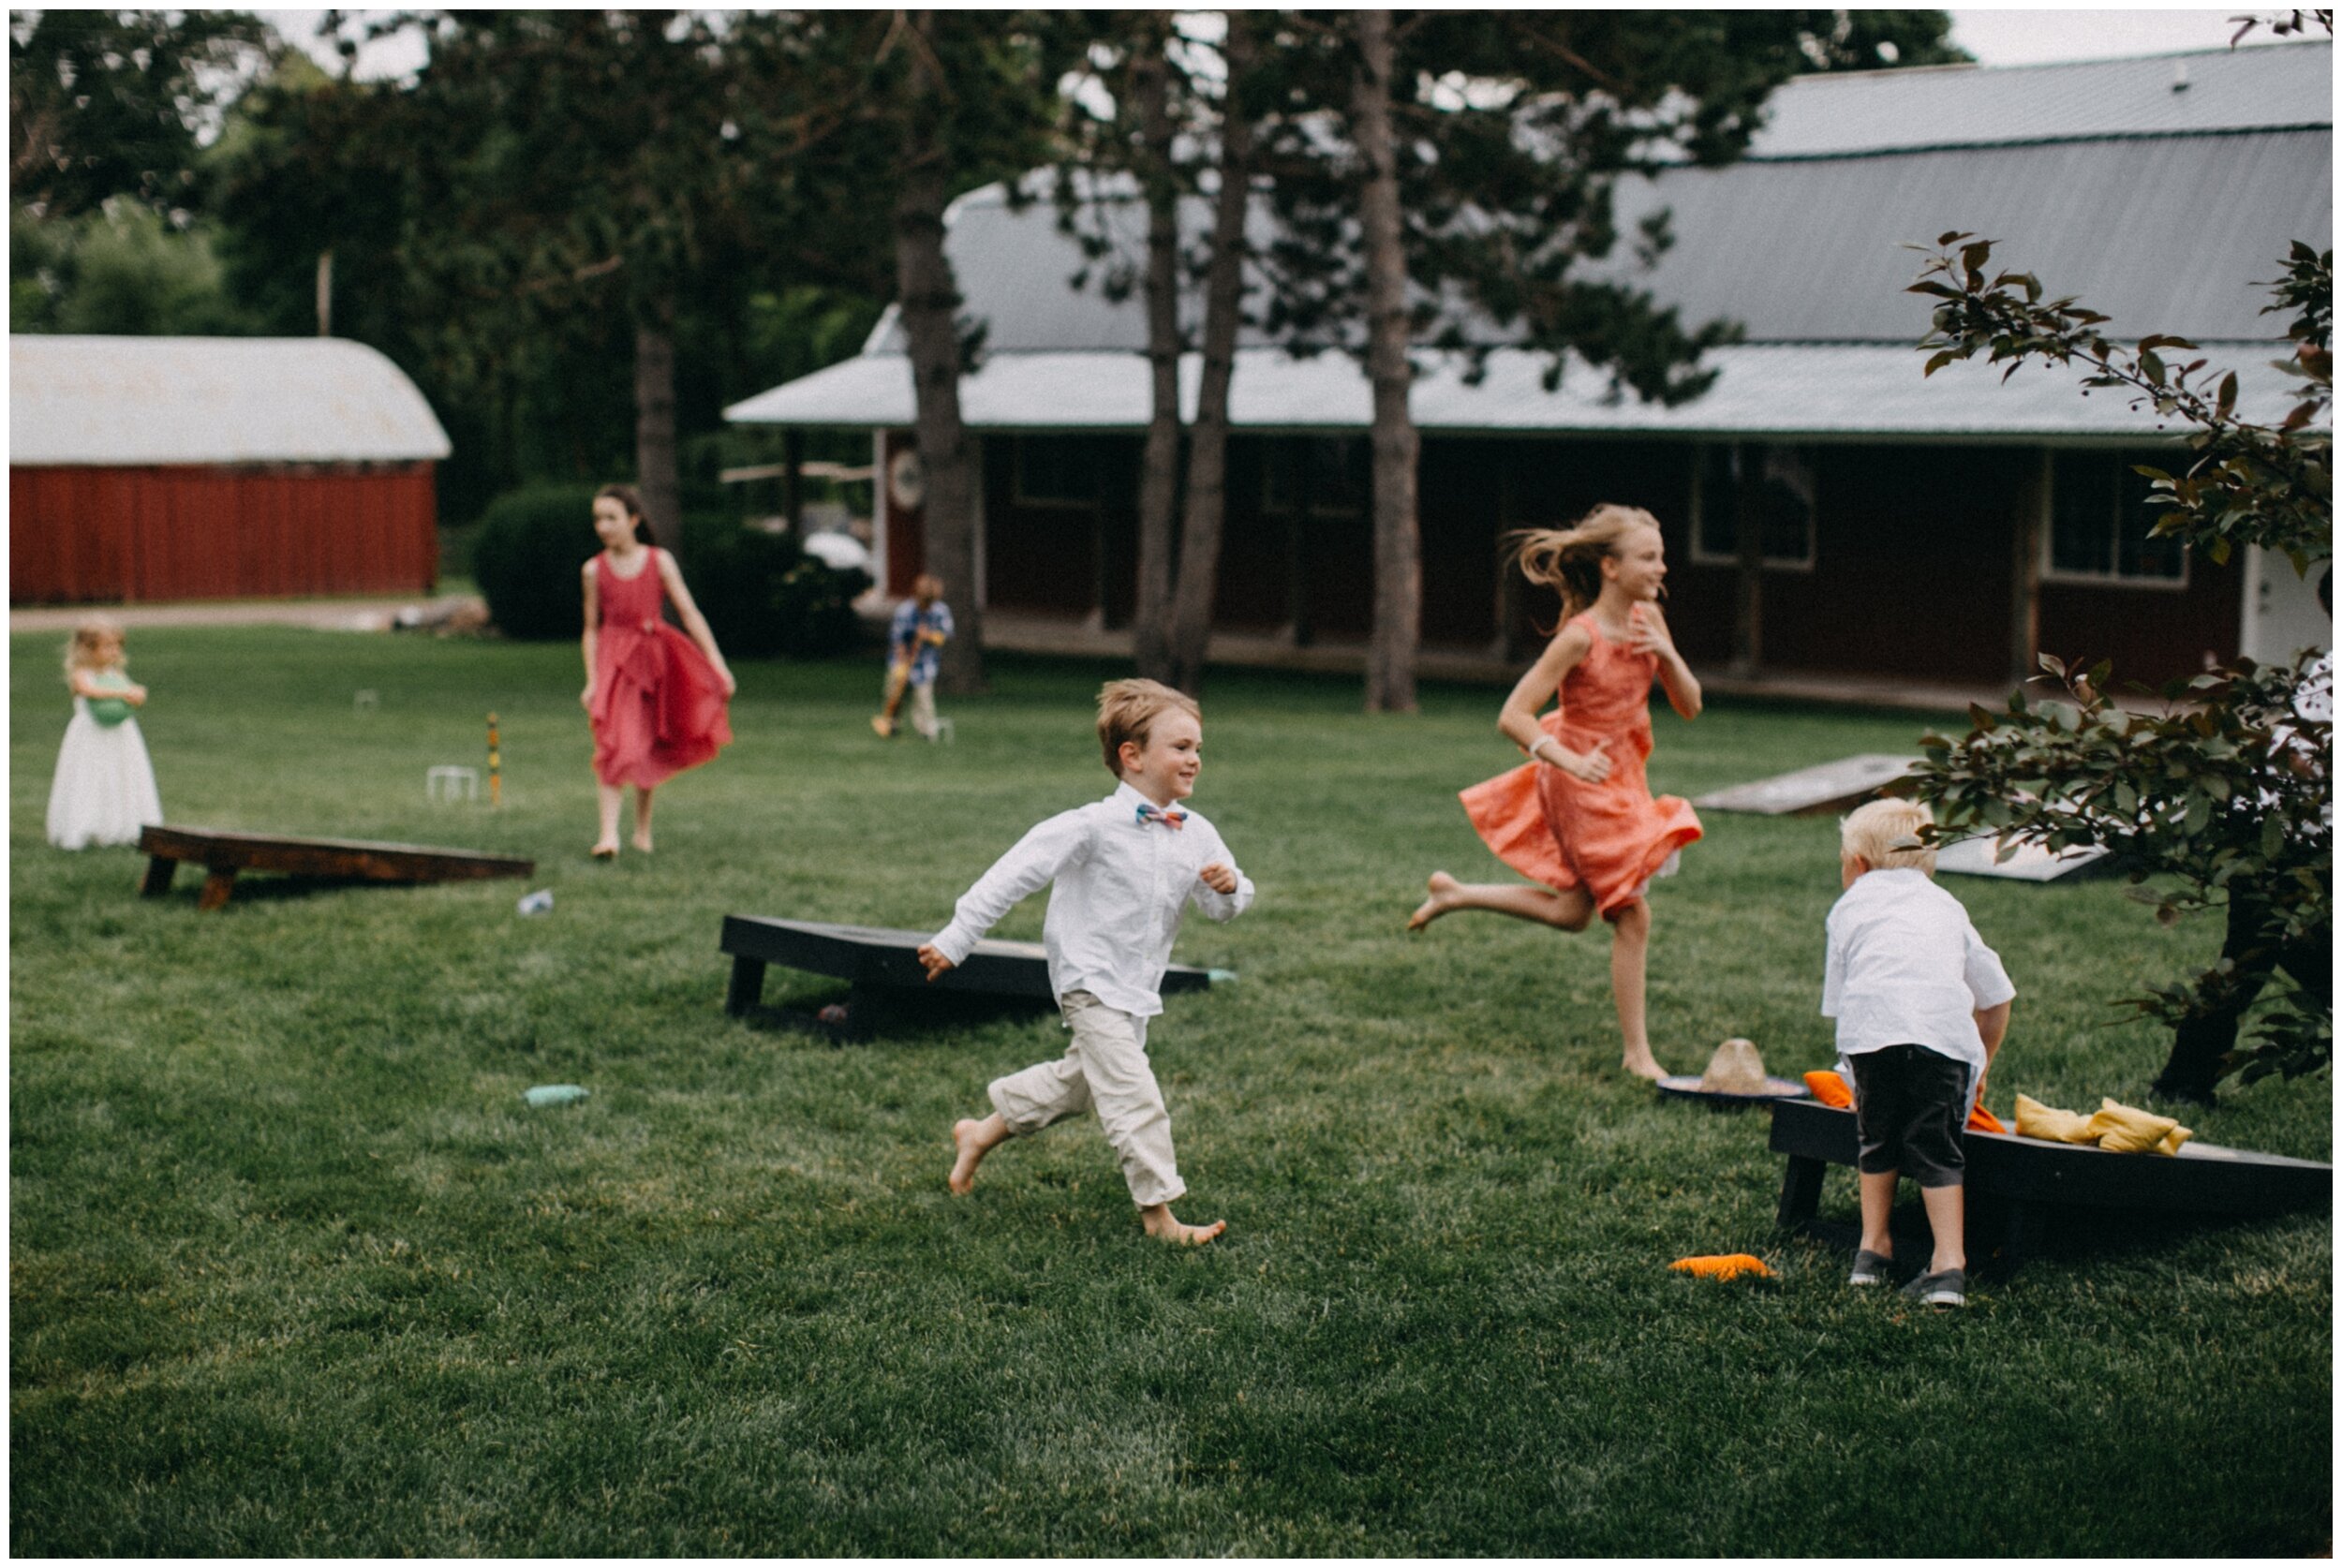 Kids running at outdoor wedding reception